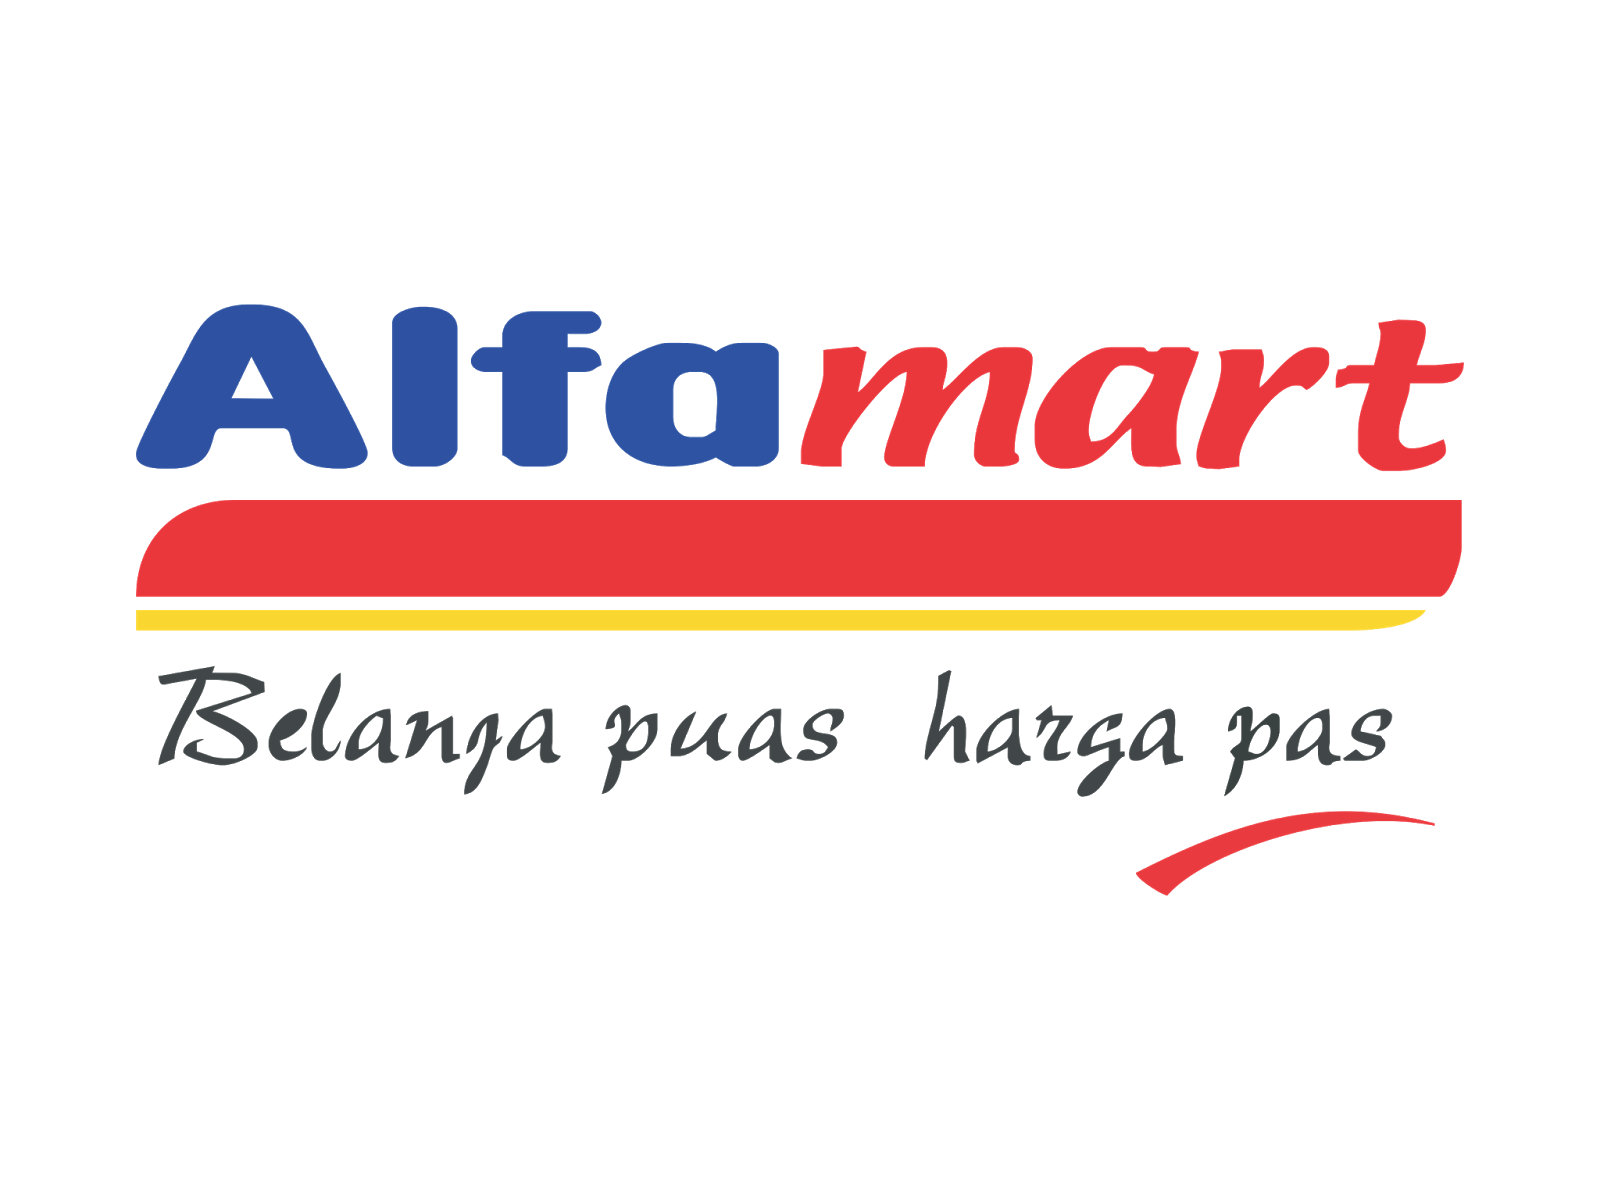 logo alfamart